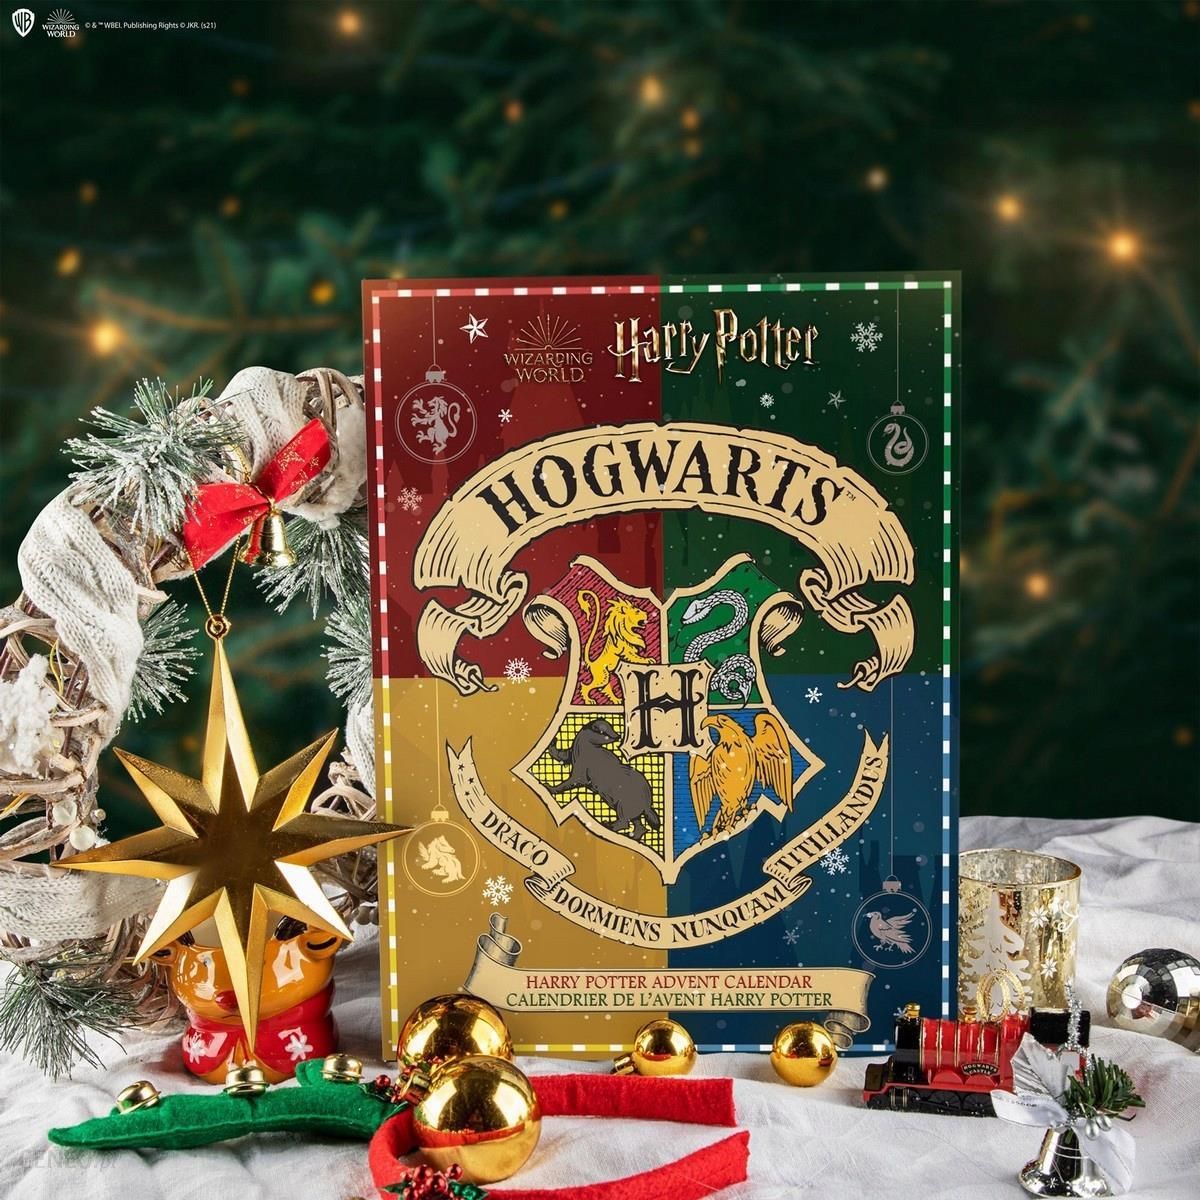  Harry Potter Kalendarz Adwentowy 24 prezenty wizarding world отзывы - изображения 5